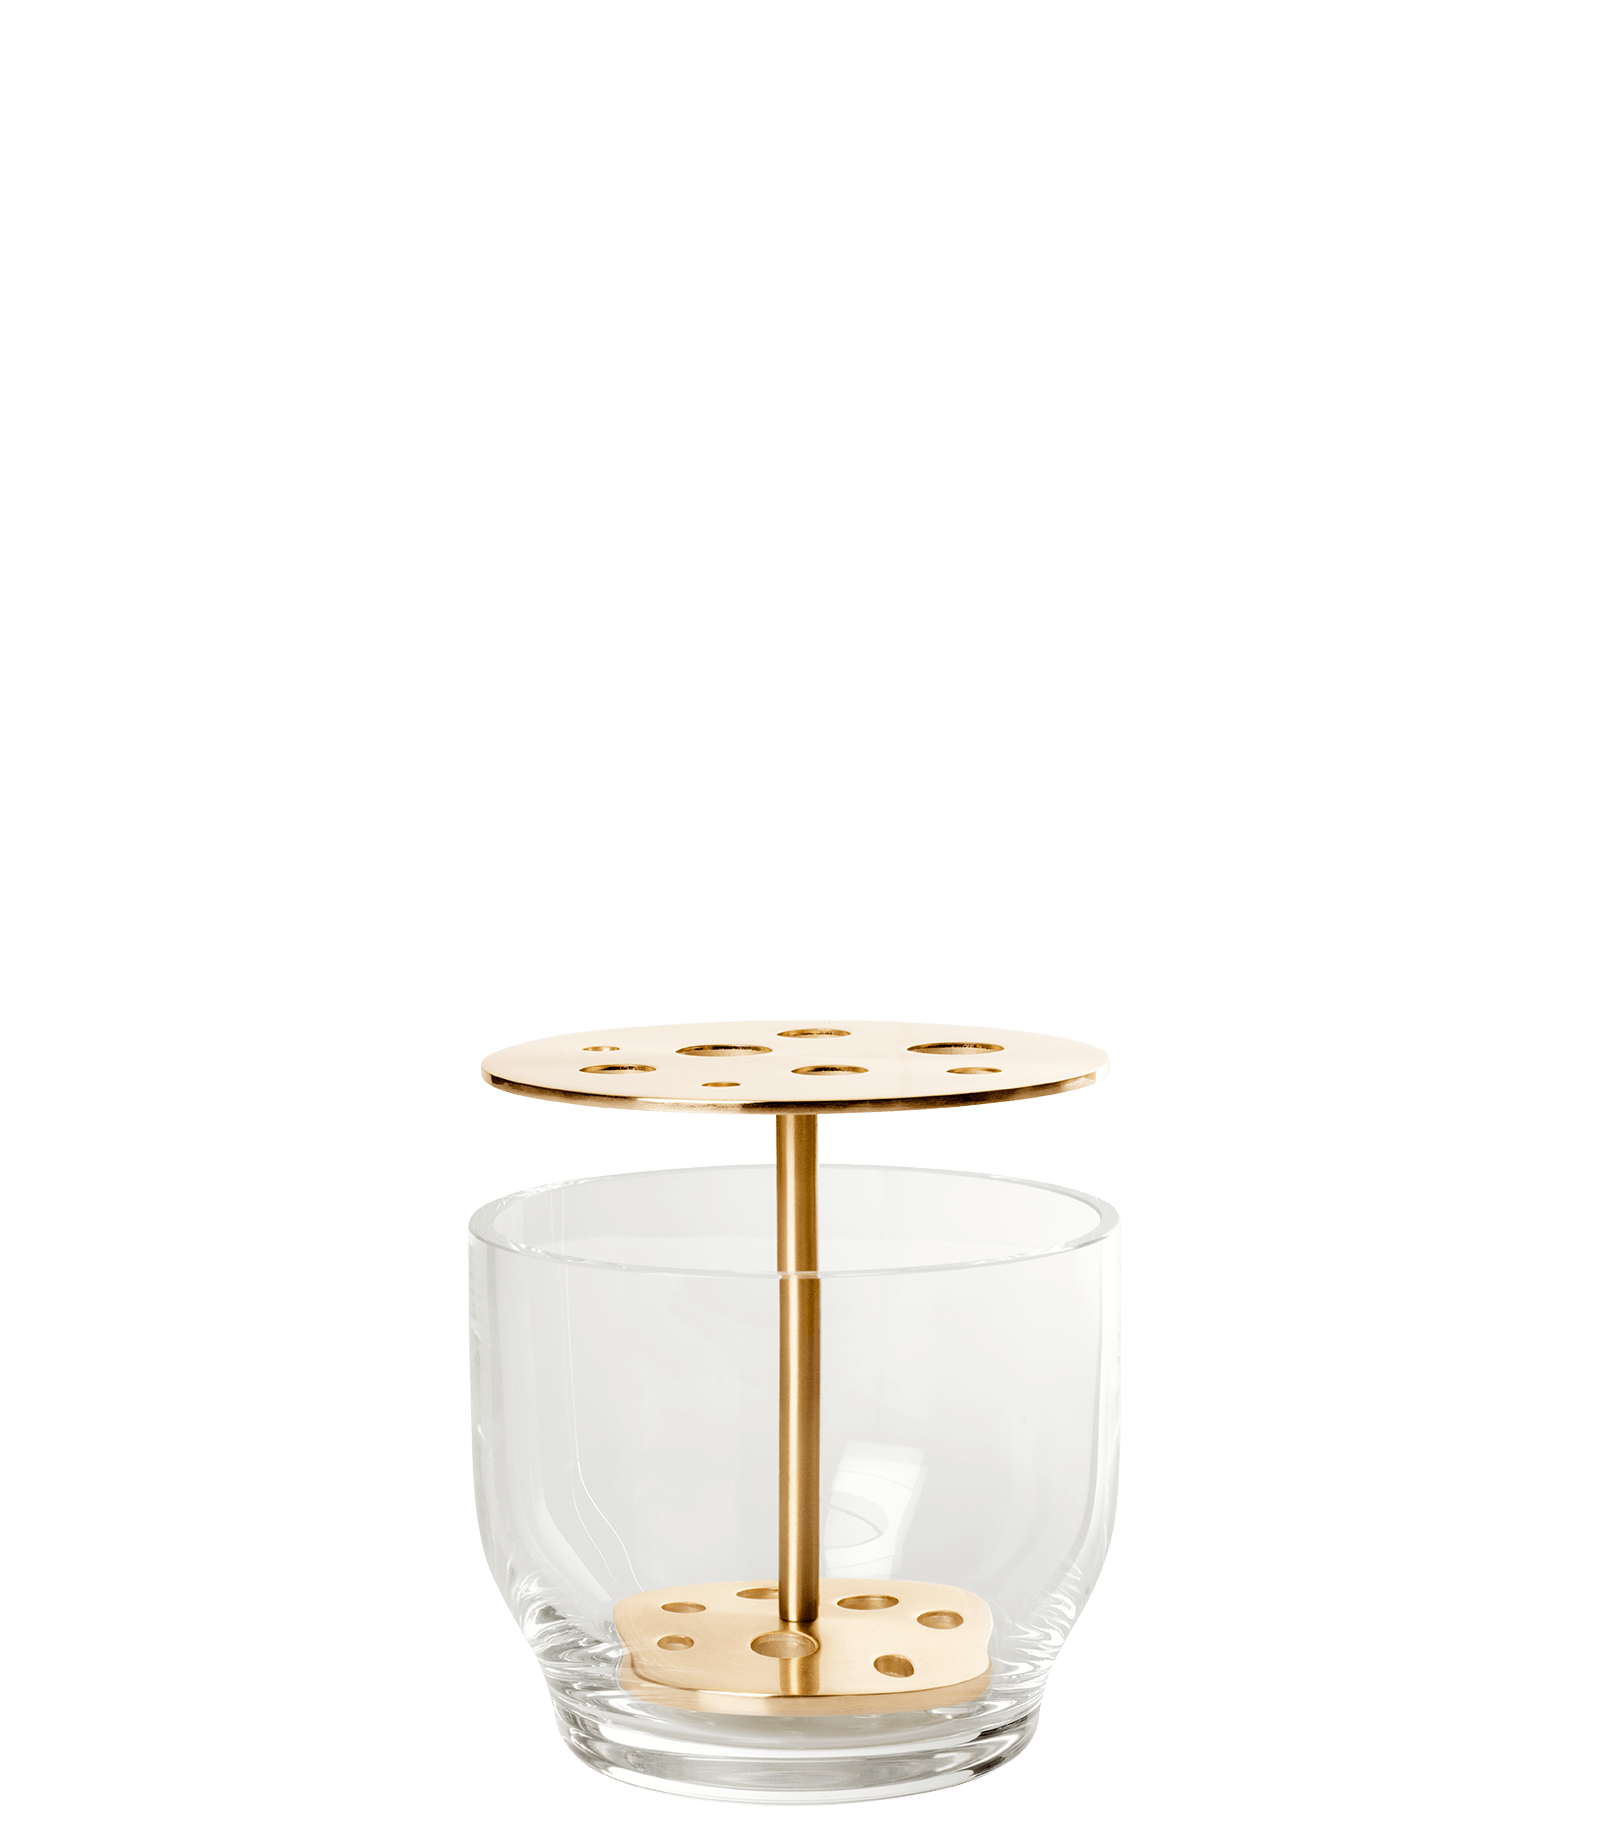 Ikebana Vase Small